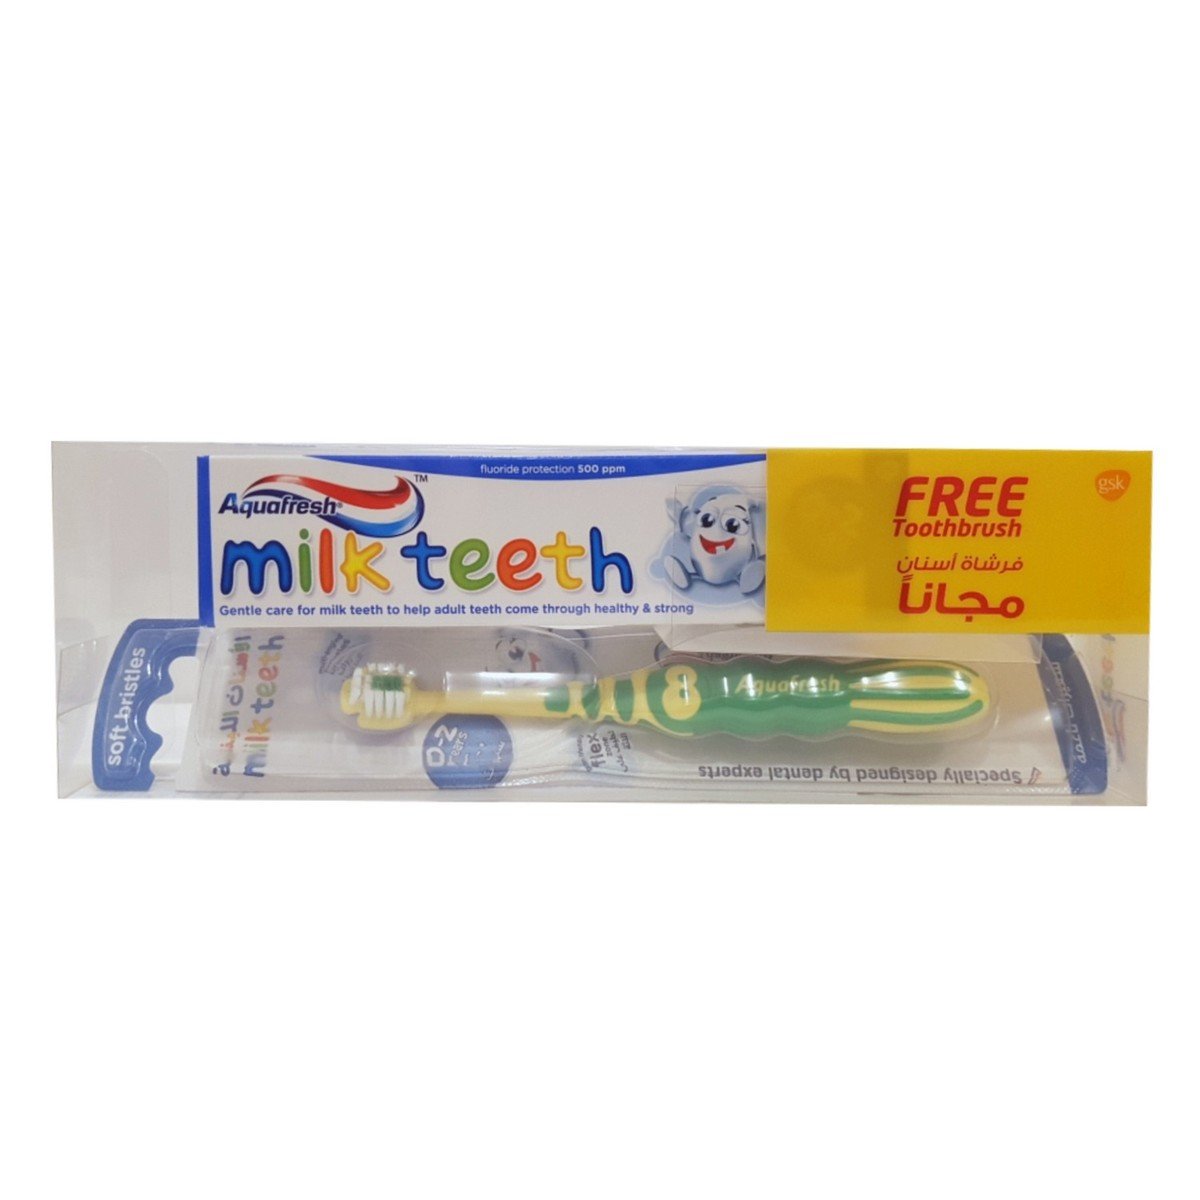 Aquafresh Toothpaste Milk Teeth 50 ml + Toothbrush 0-2 years 1 pc